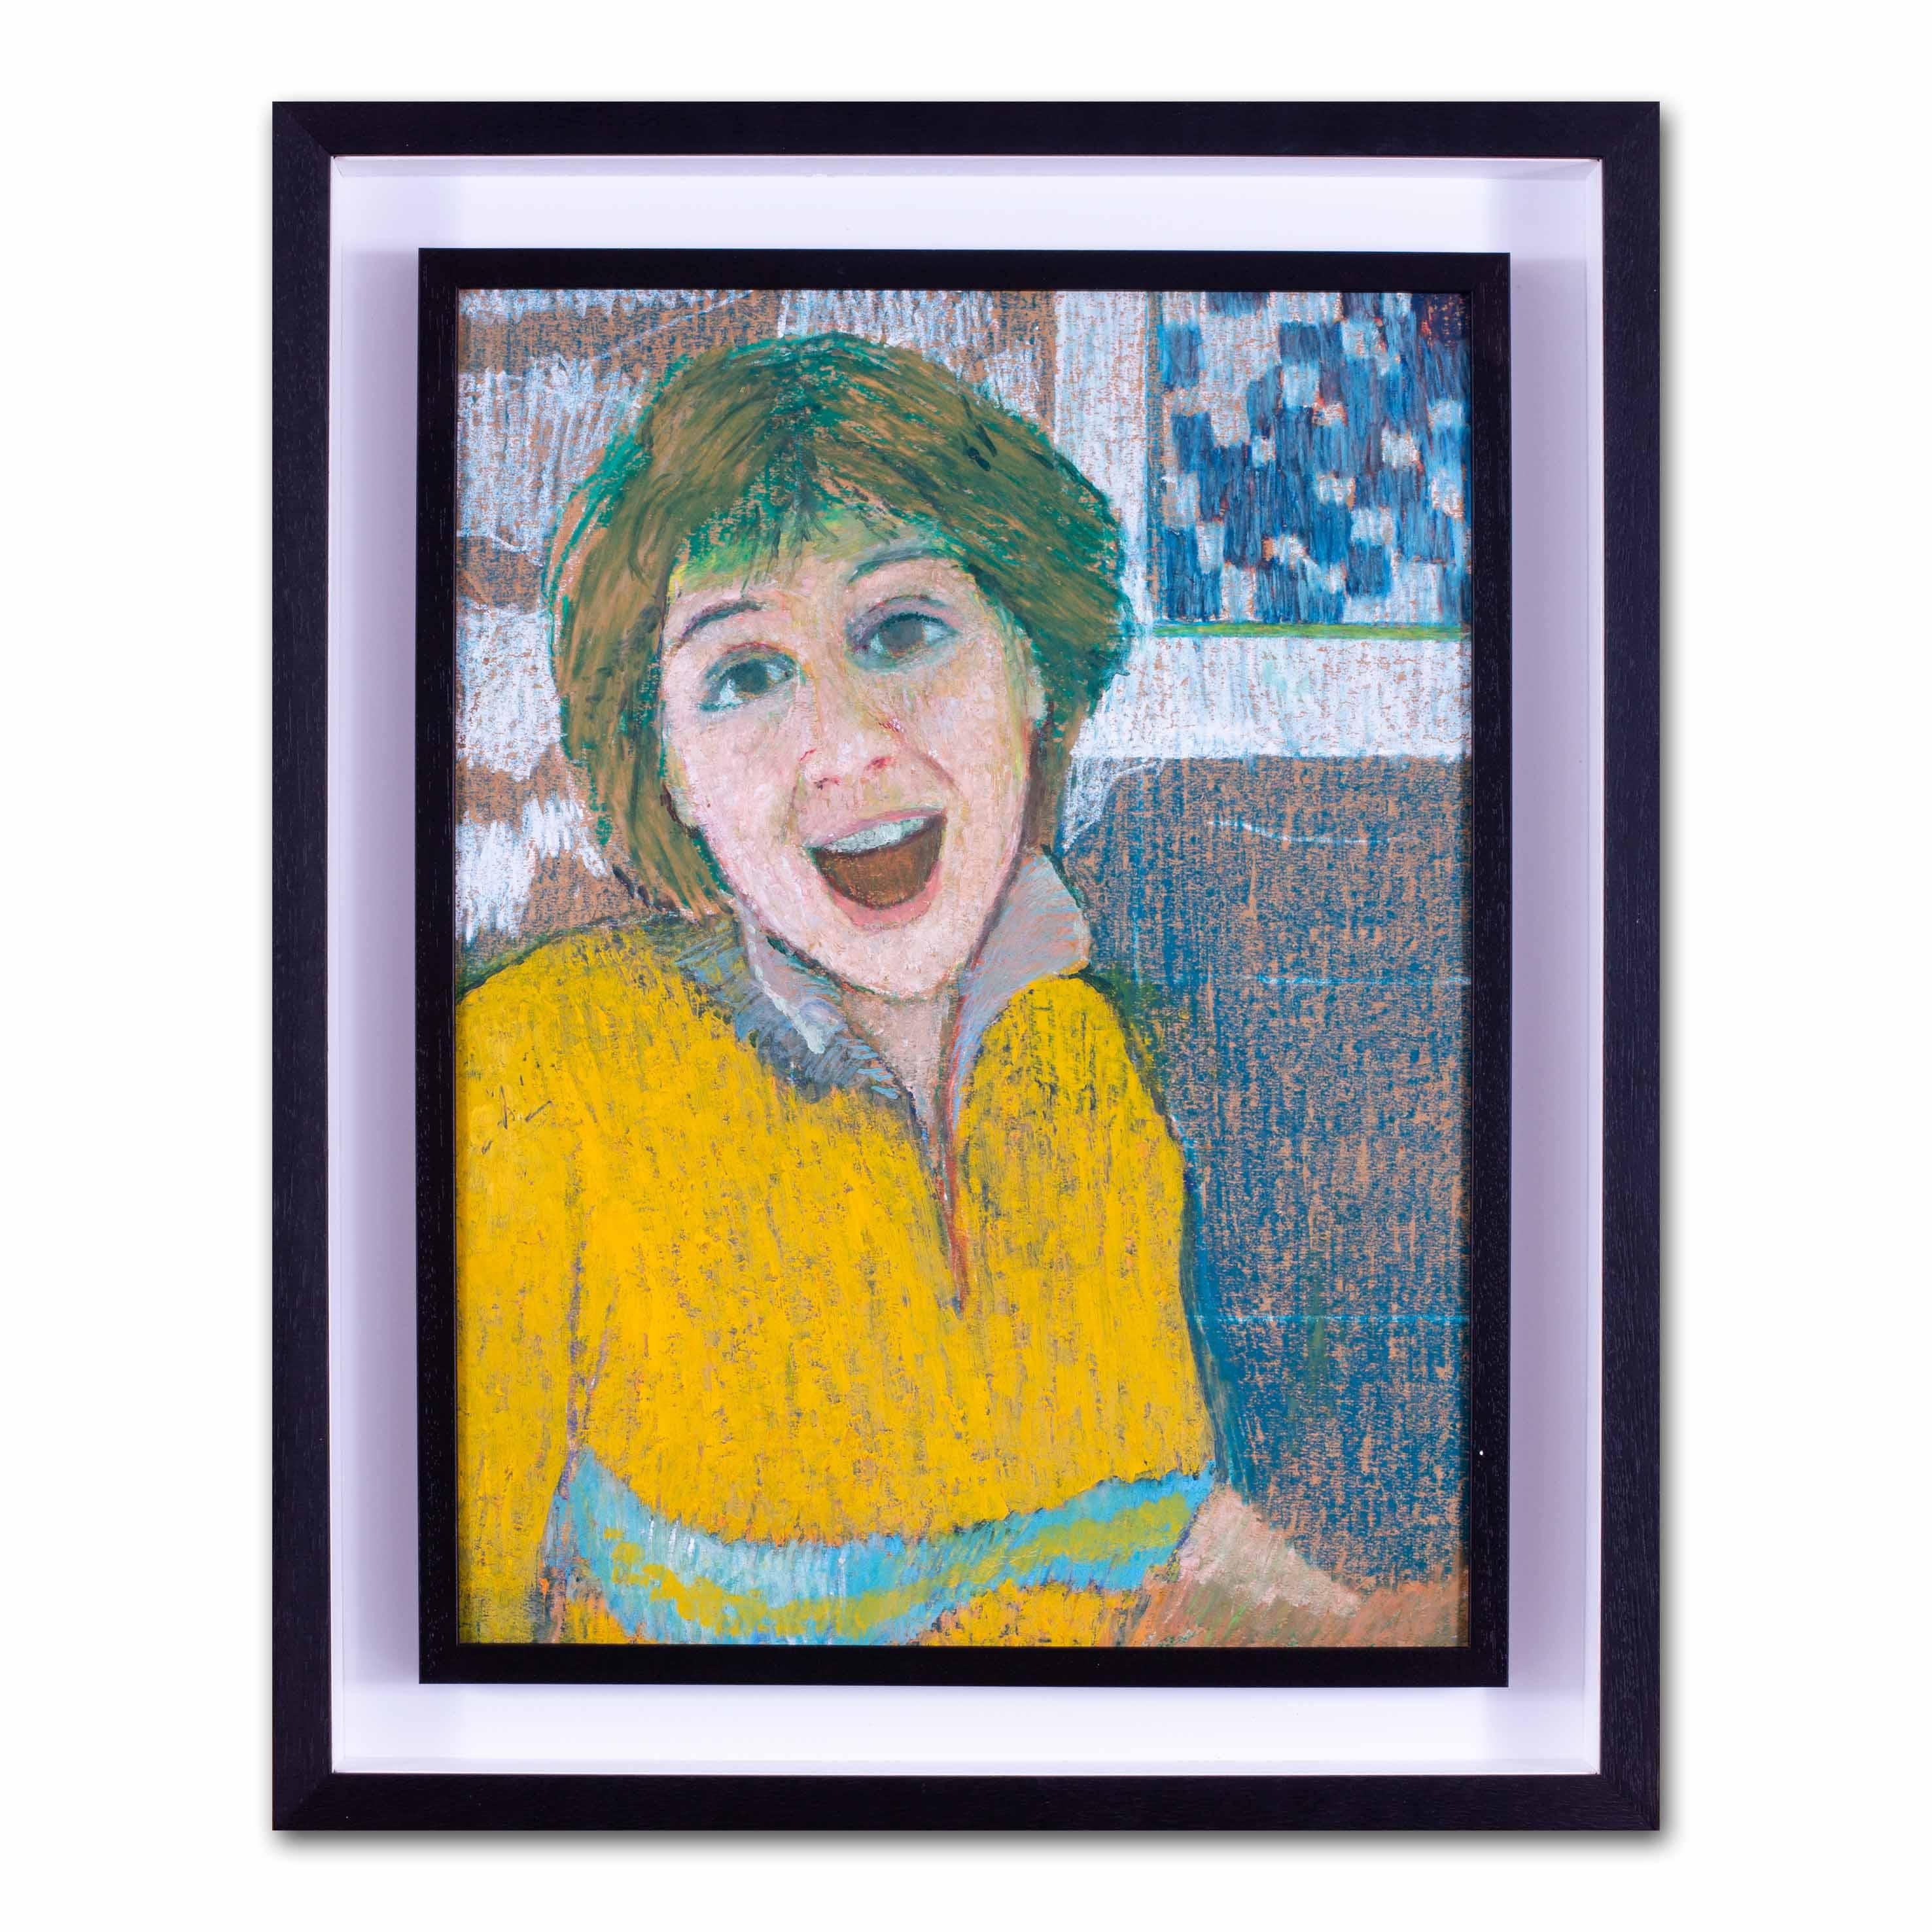 Joyful Modern British portrait of famed comedian Victoria Wood by Ewart Johns